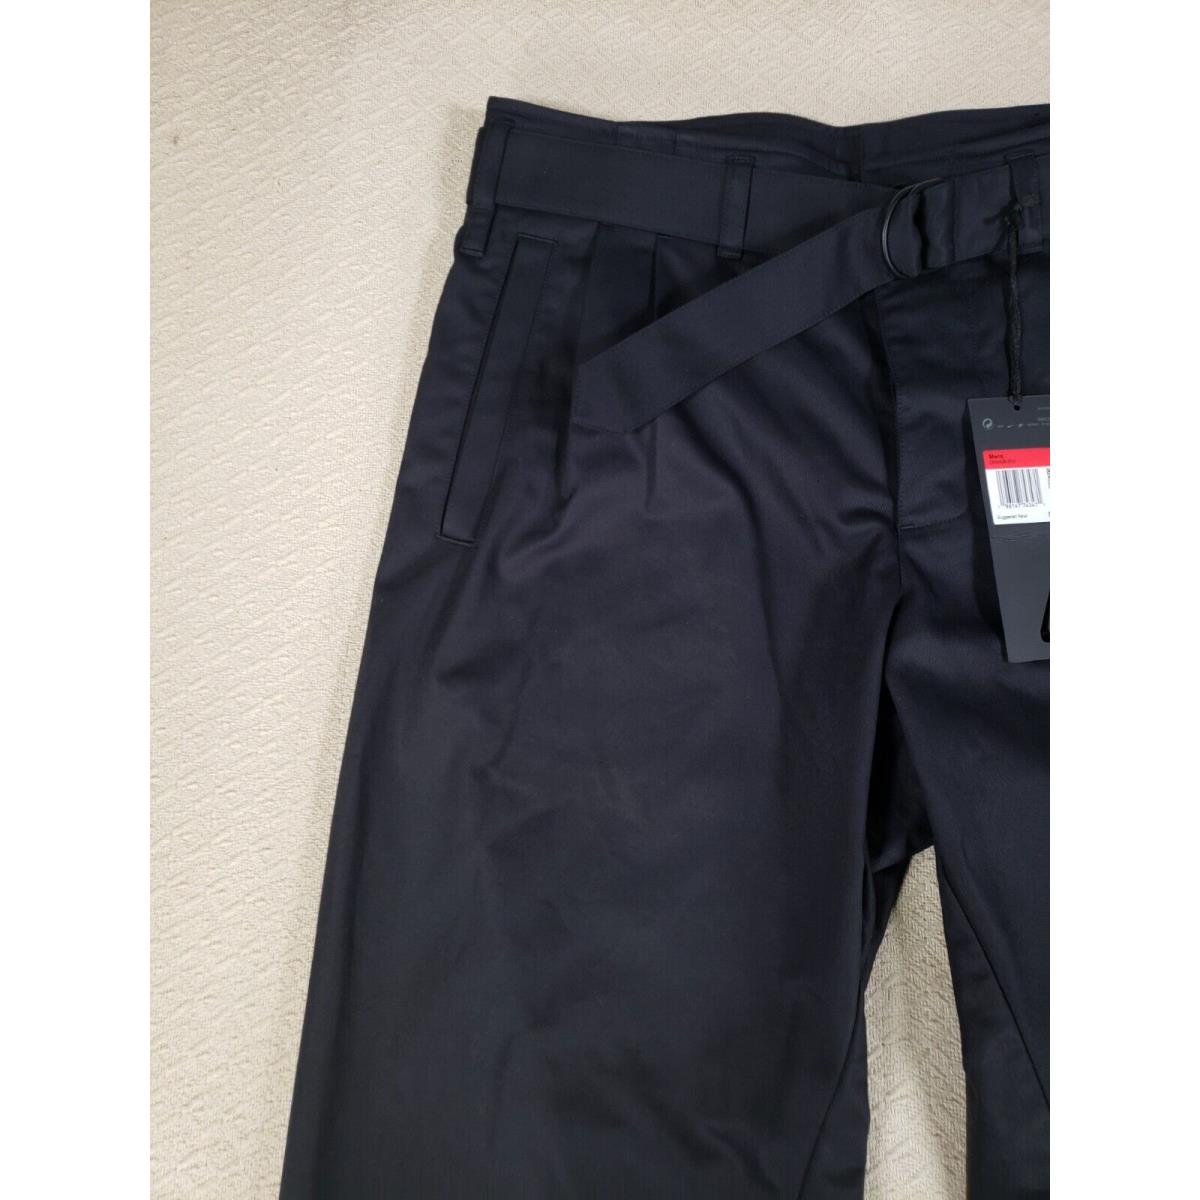 Nike Esc Pants Mens Large 35x31 Black Wool Blend Woven Workers DR5408-010